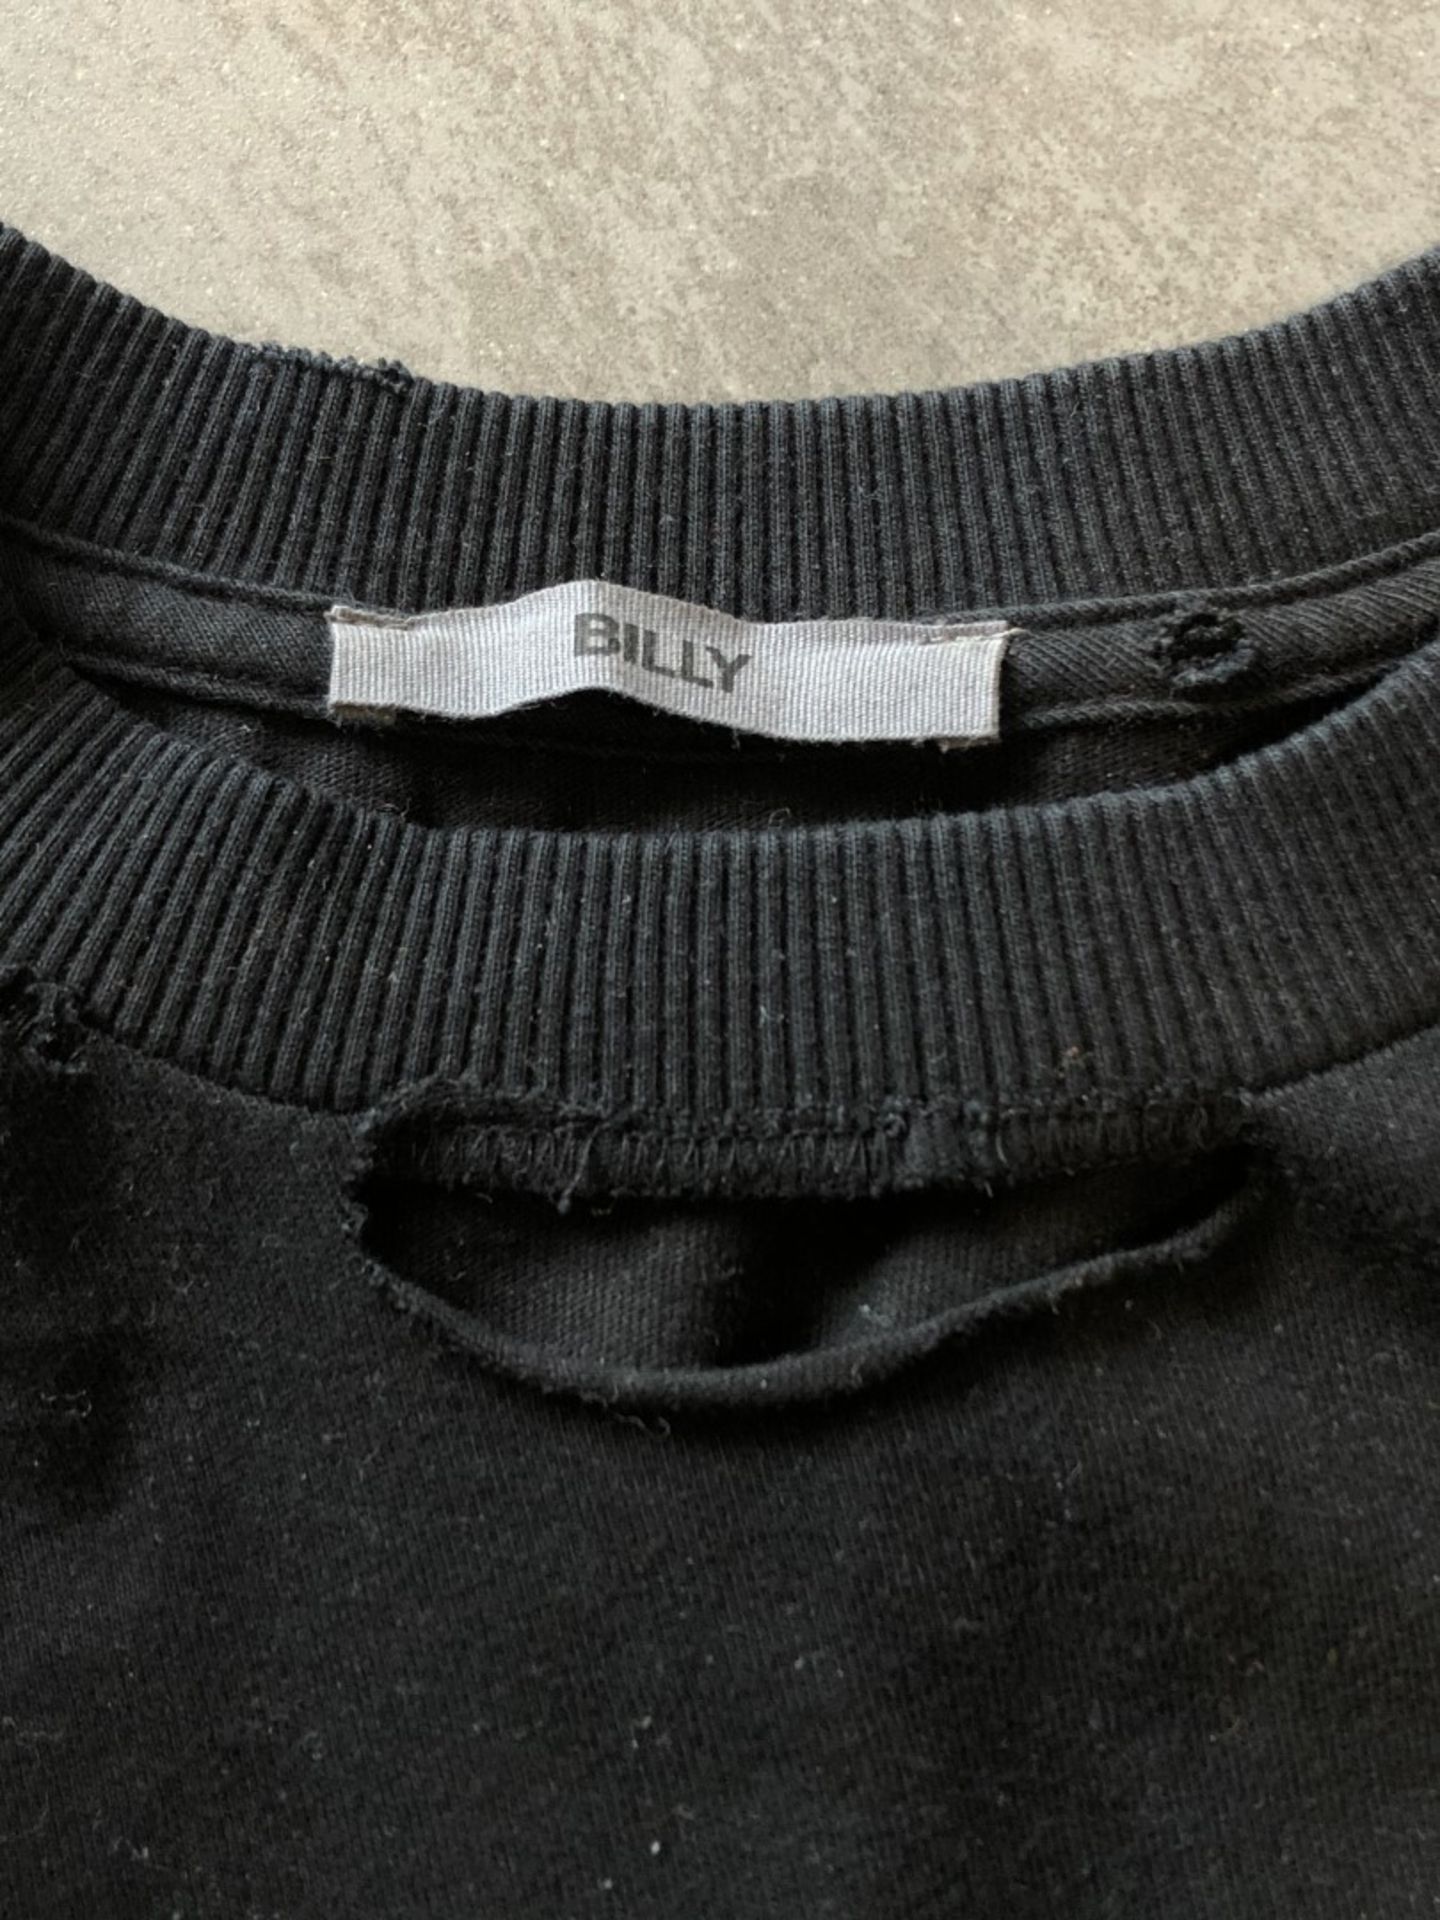 1 x Men's Genuine Billy Designer Distressed T-Shirt In Black "Billy" - SIZE: LARGE - Image 2 of 8